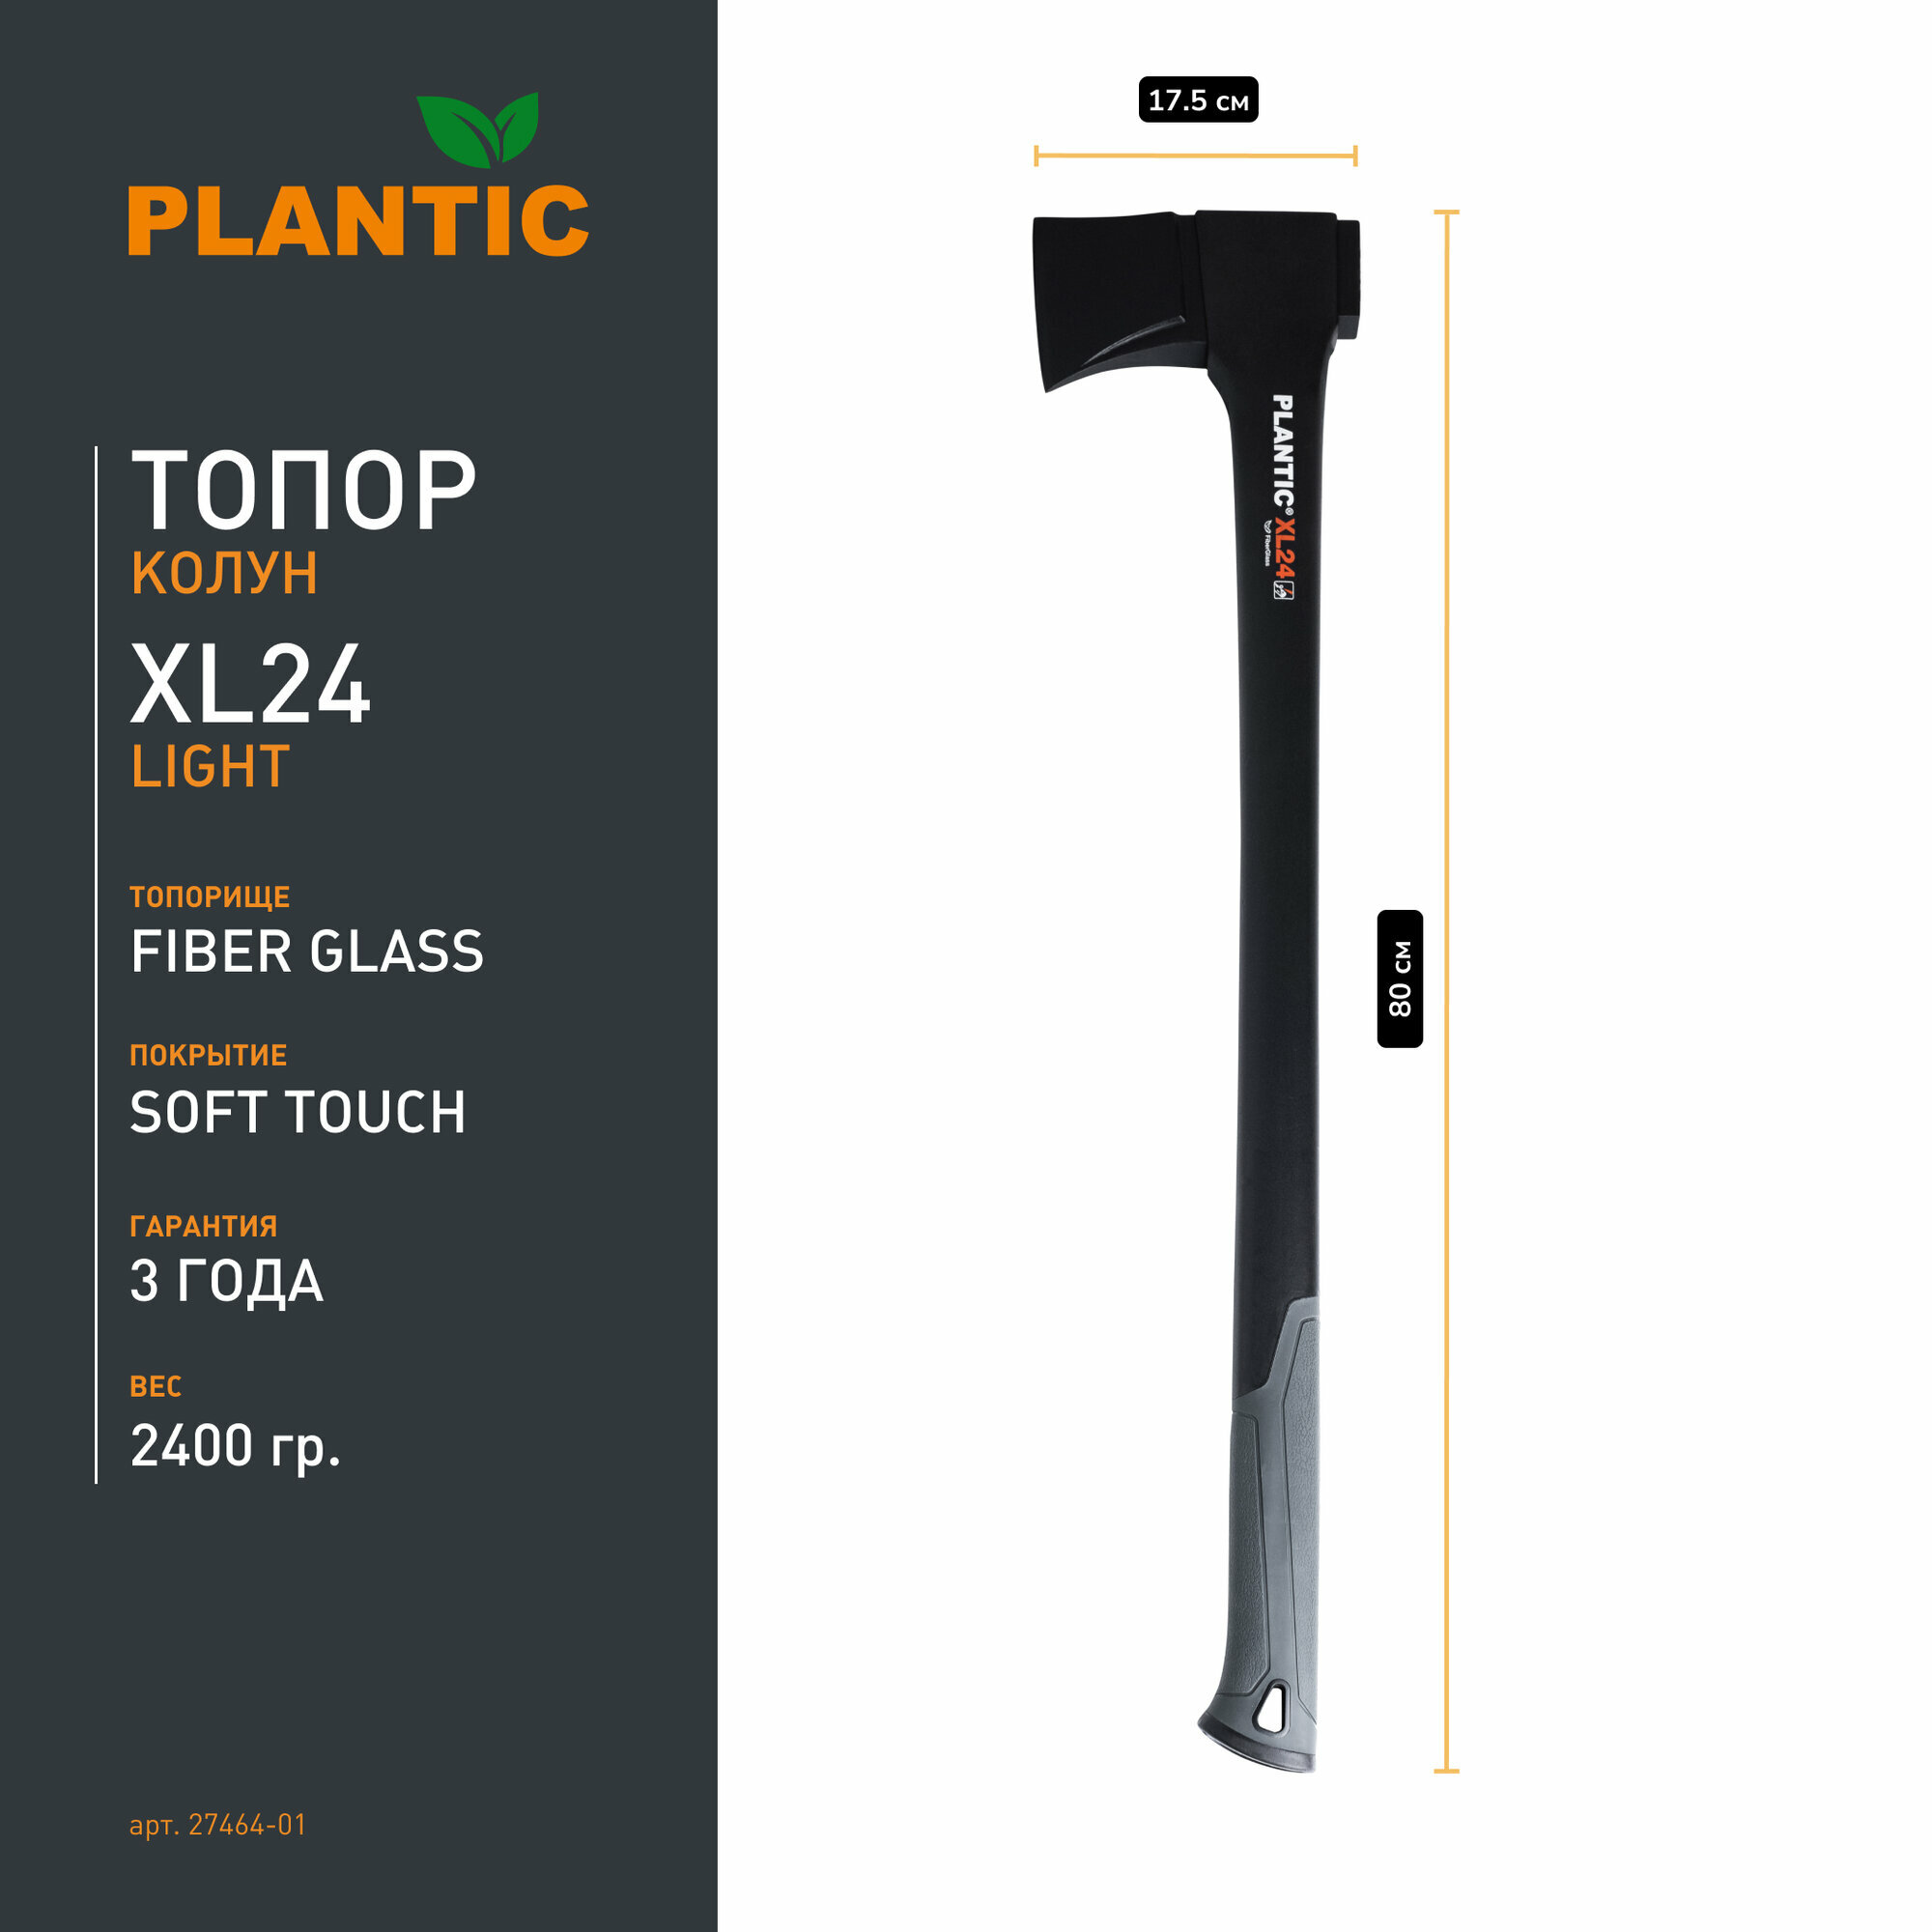 Топор-колун Plantic Light XL24 двухкомпонентная ручка 875 мм 1900 кг - фото №16